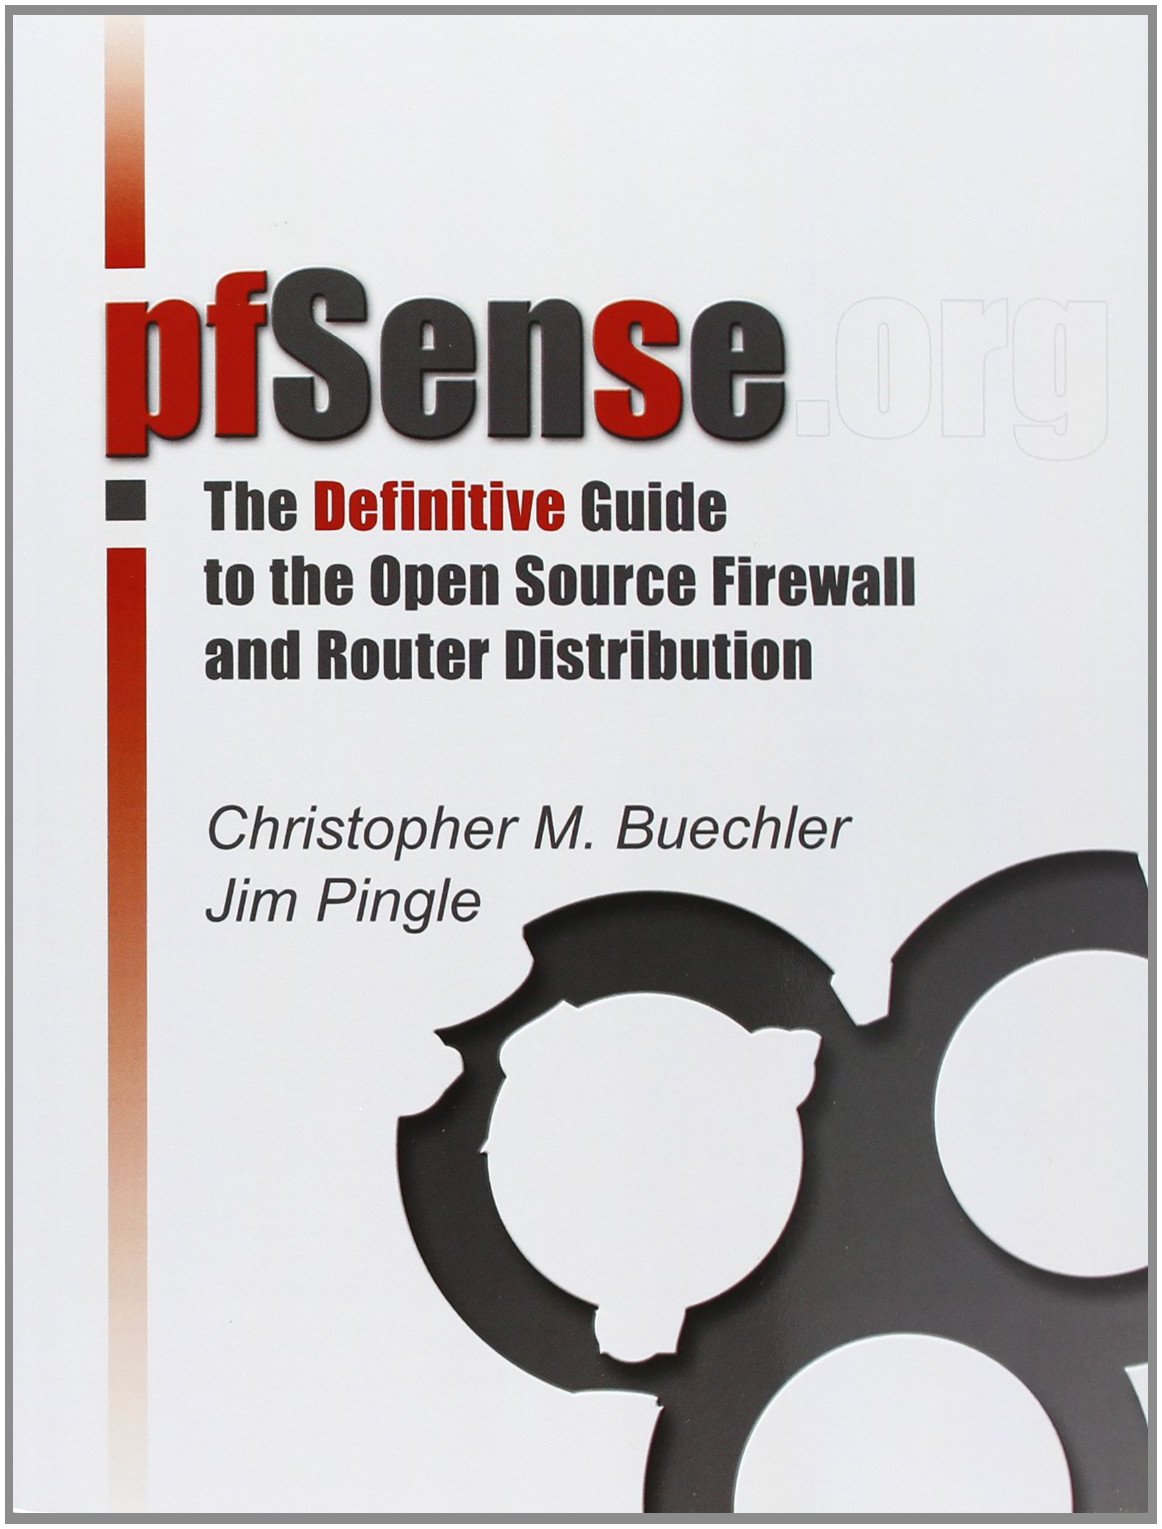 pfsense the definitive guide version 2.3 pdf